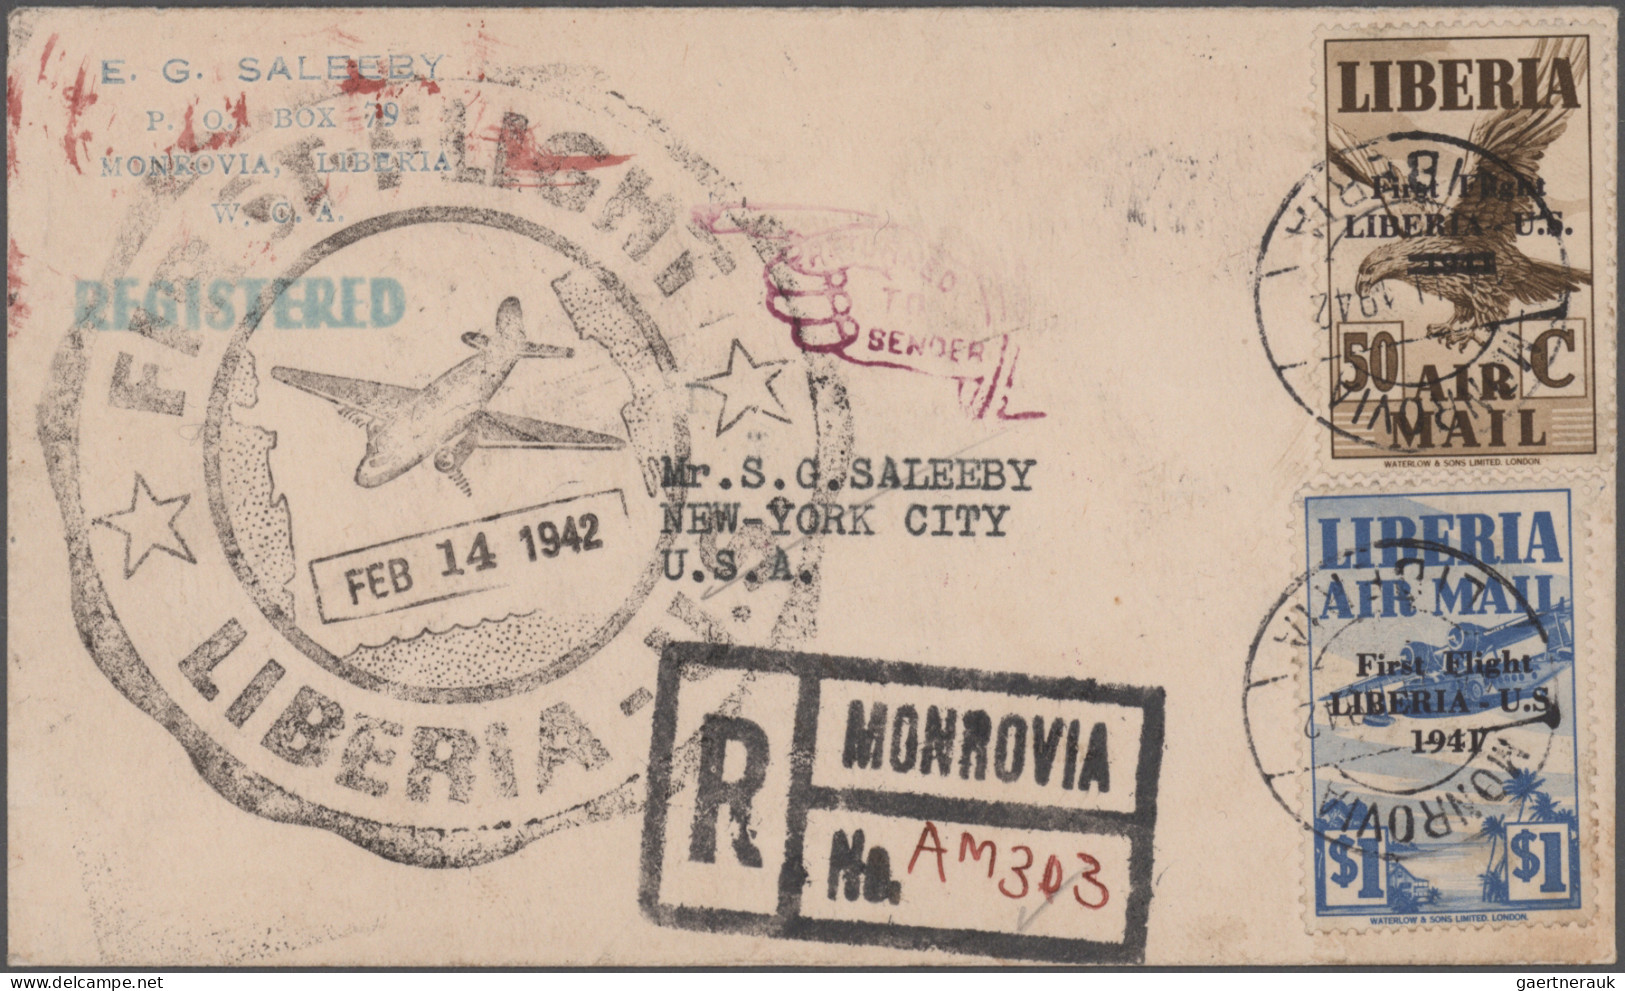 Liberia: 1942 "First Flight Liberia-U.S.": Airmail Stamp $1 Of 1941 Used Along W - Liberia